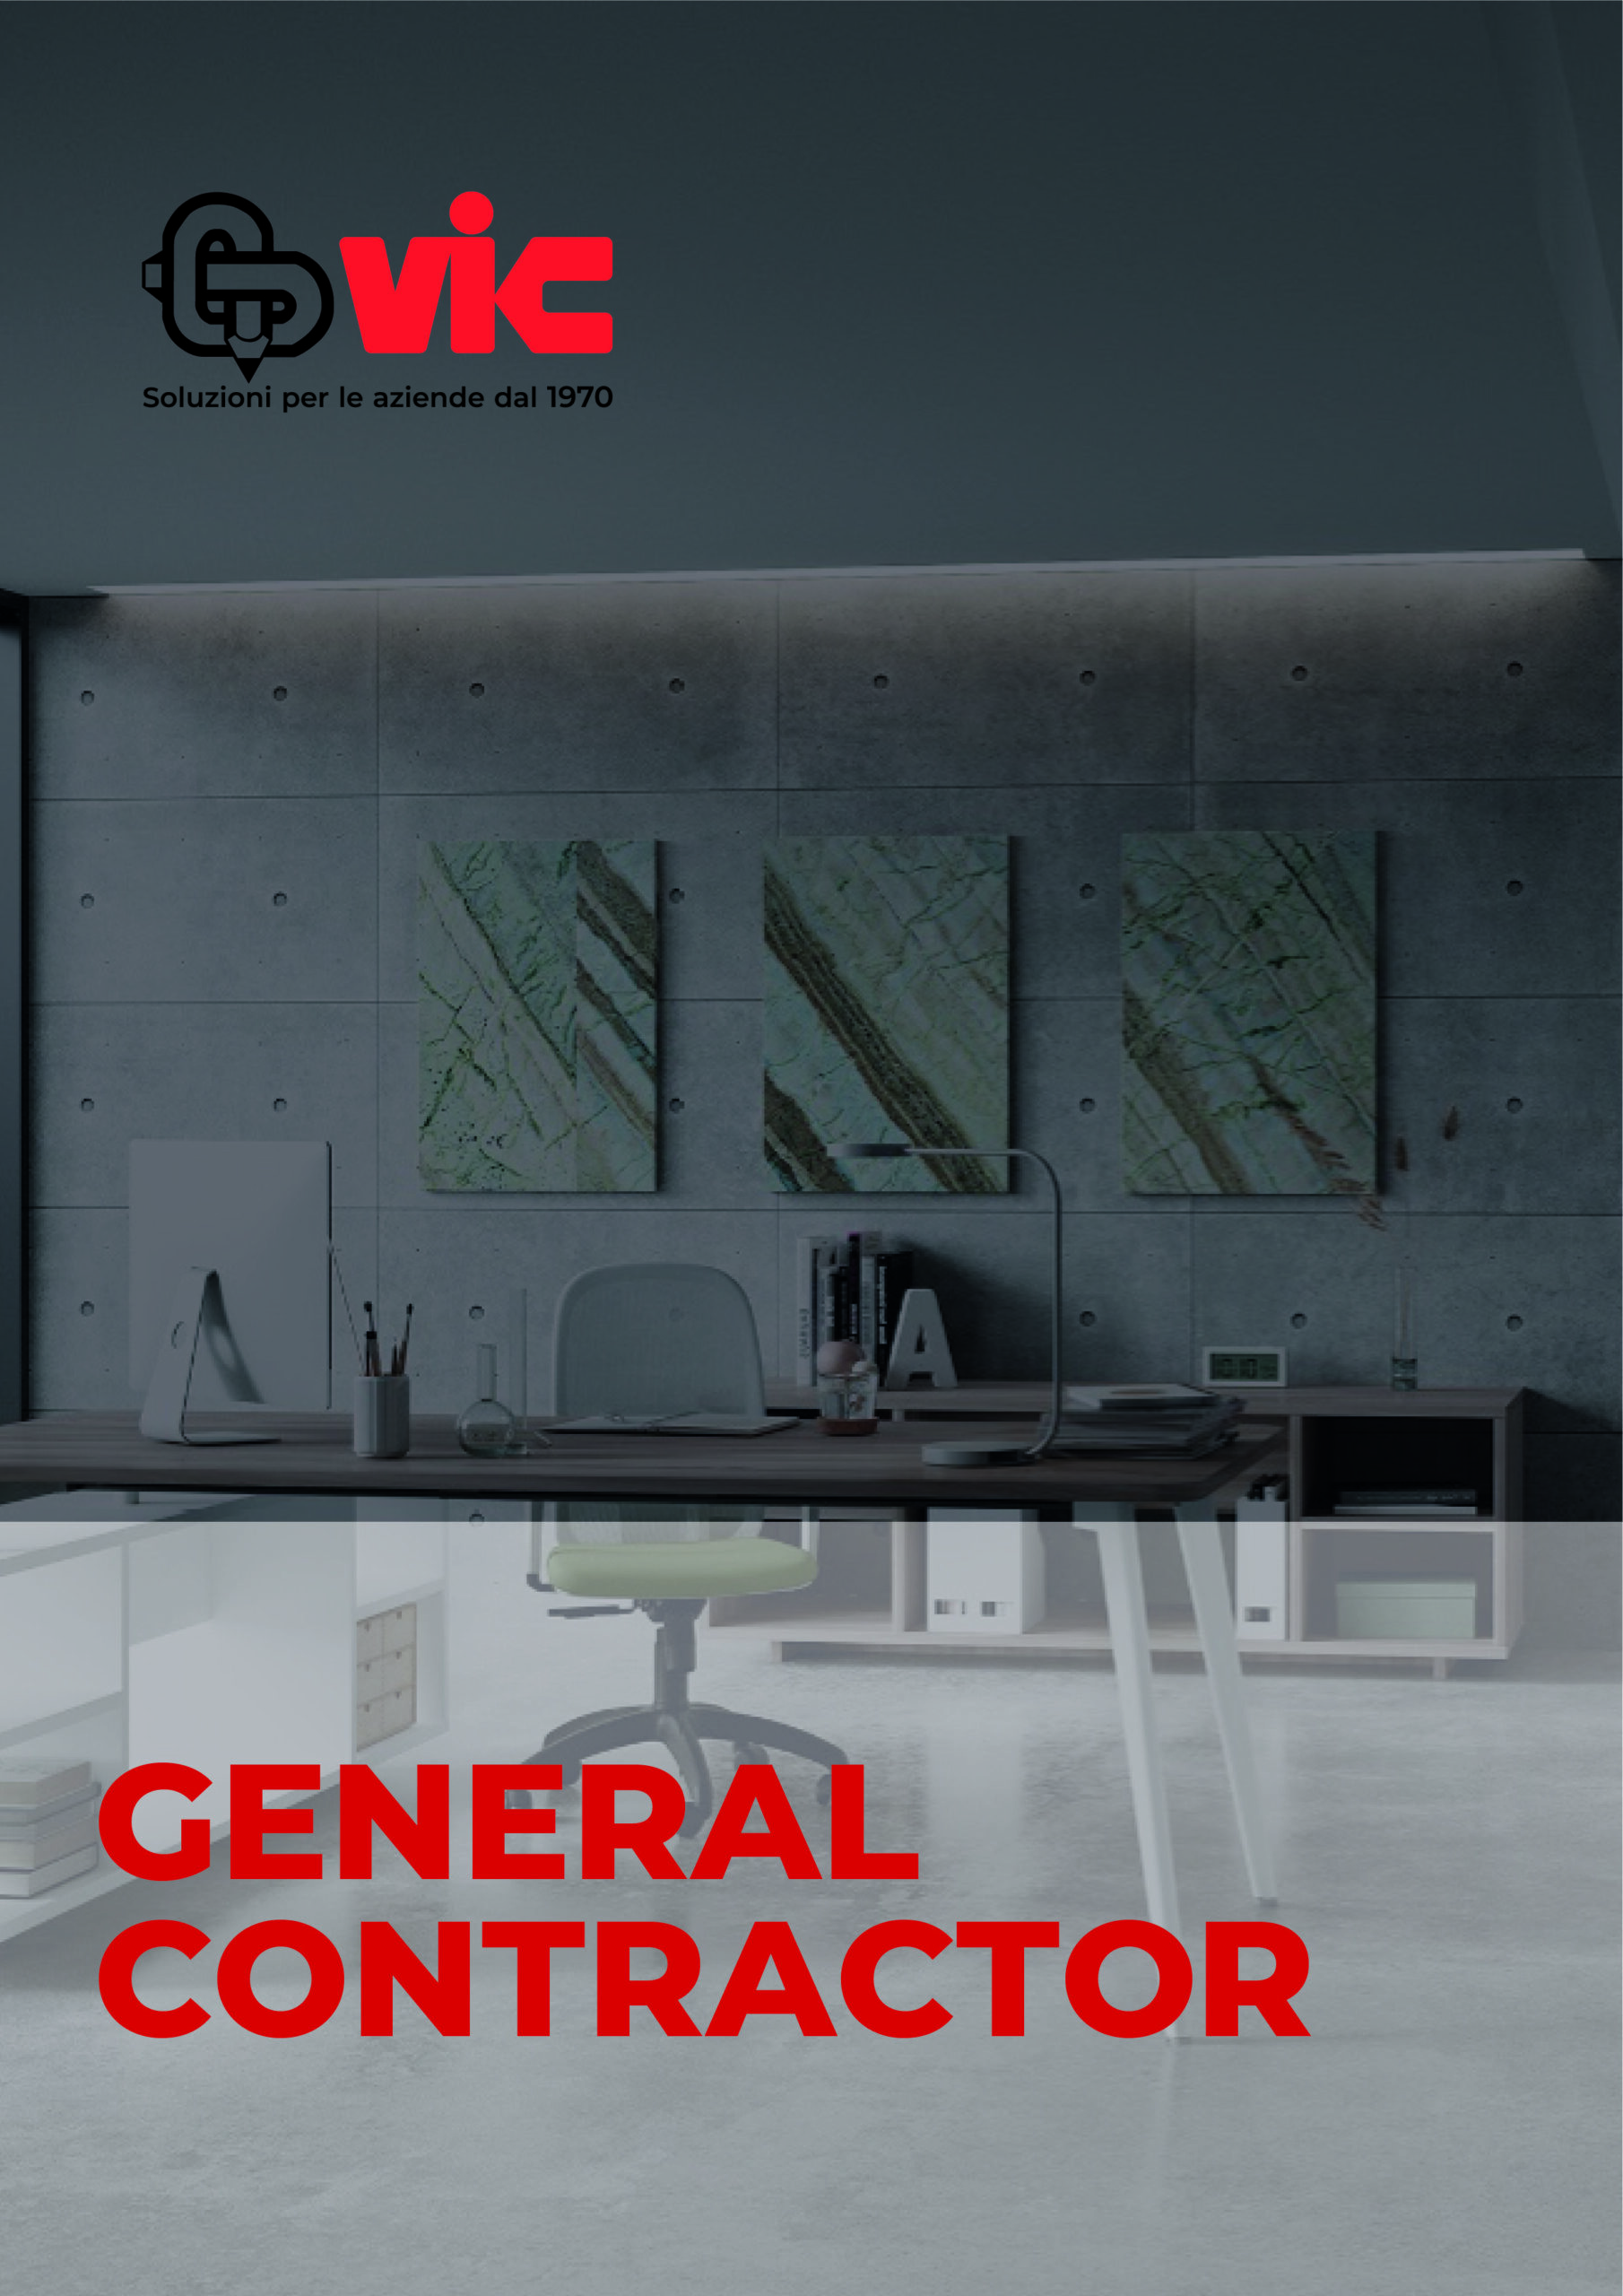 Copertina della brochure per i servizi di general contractor